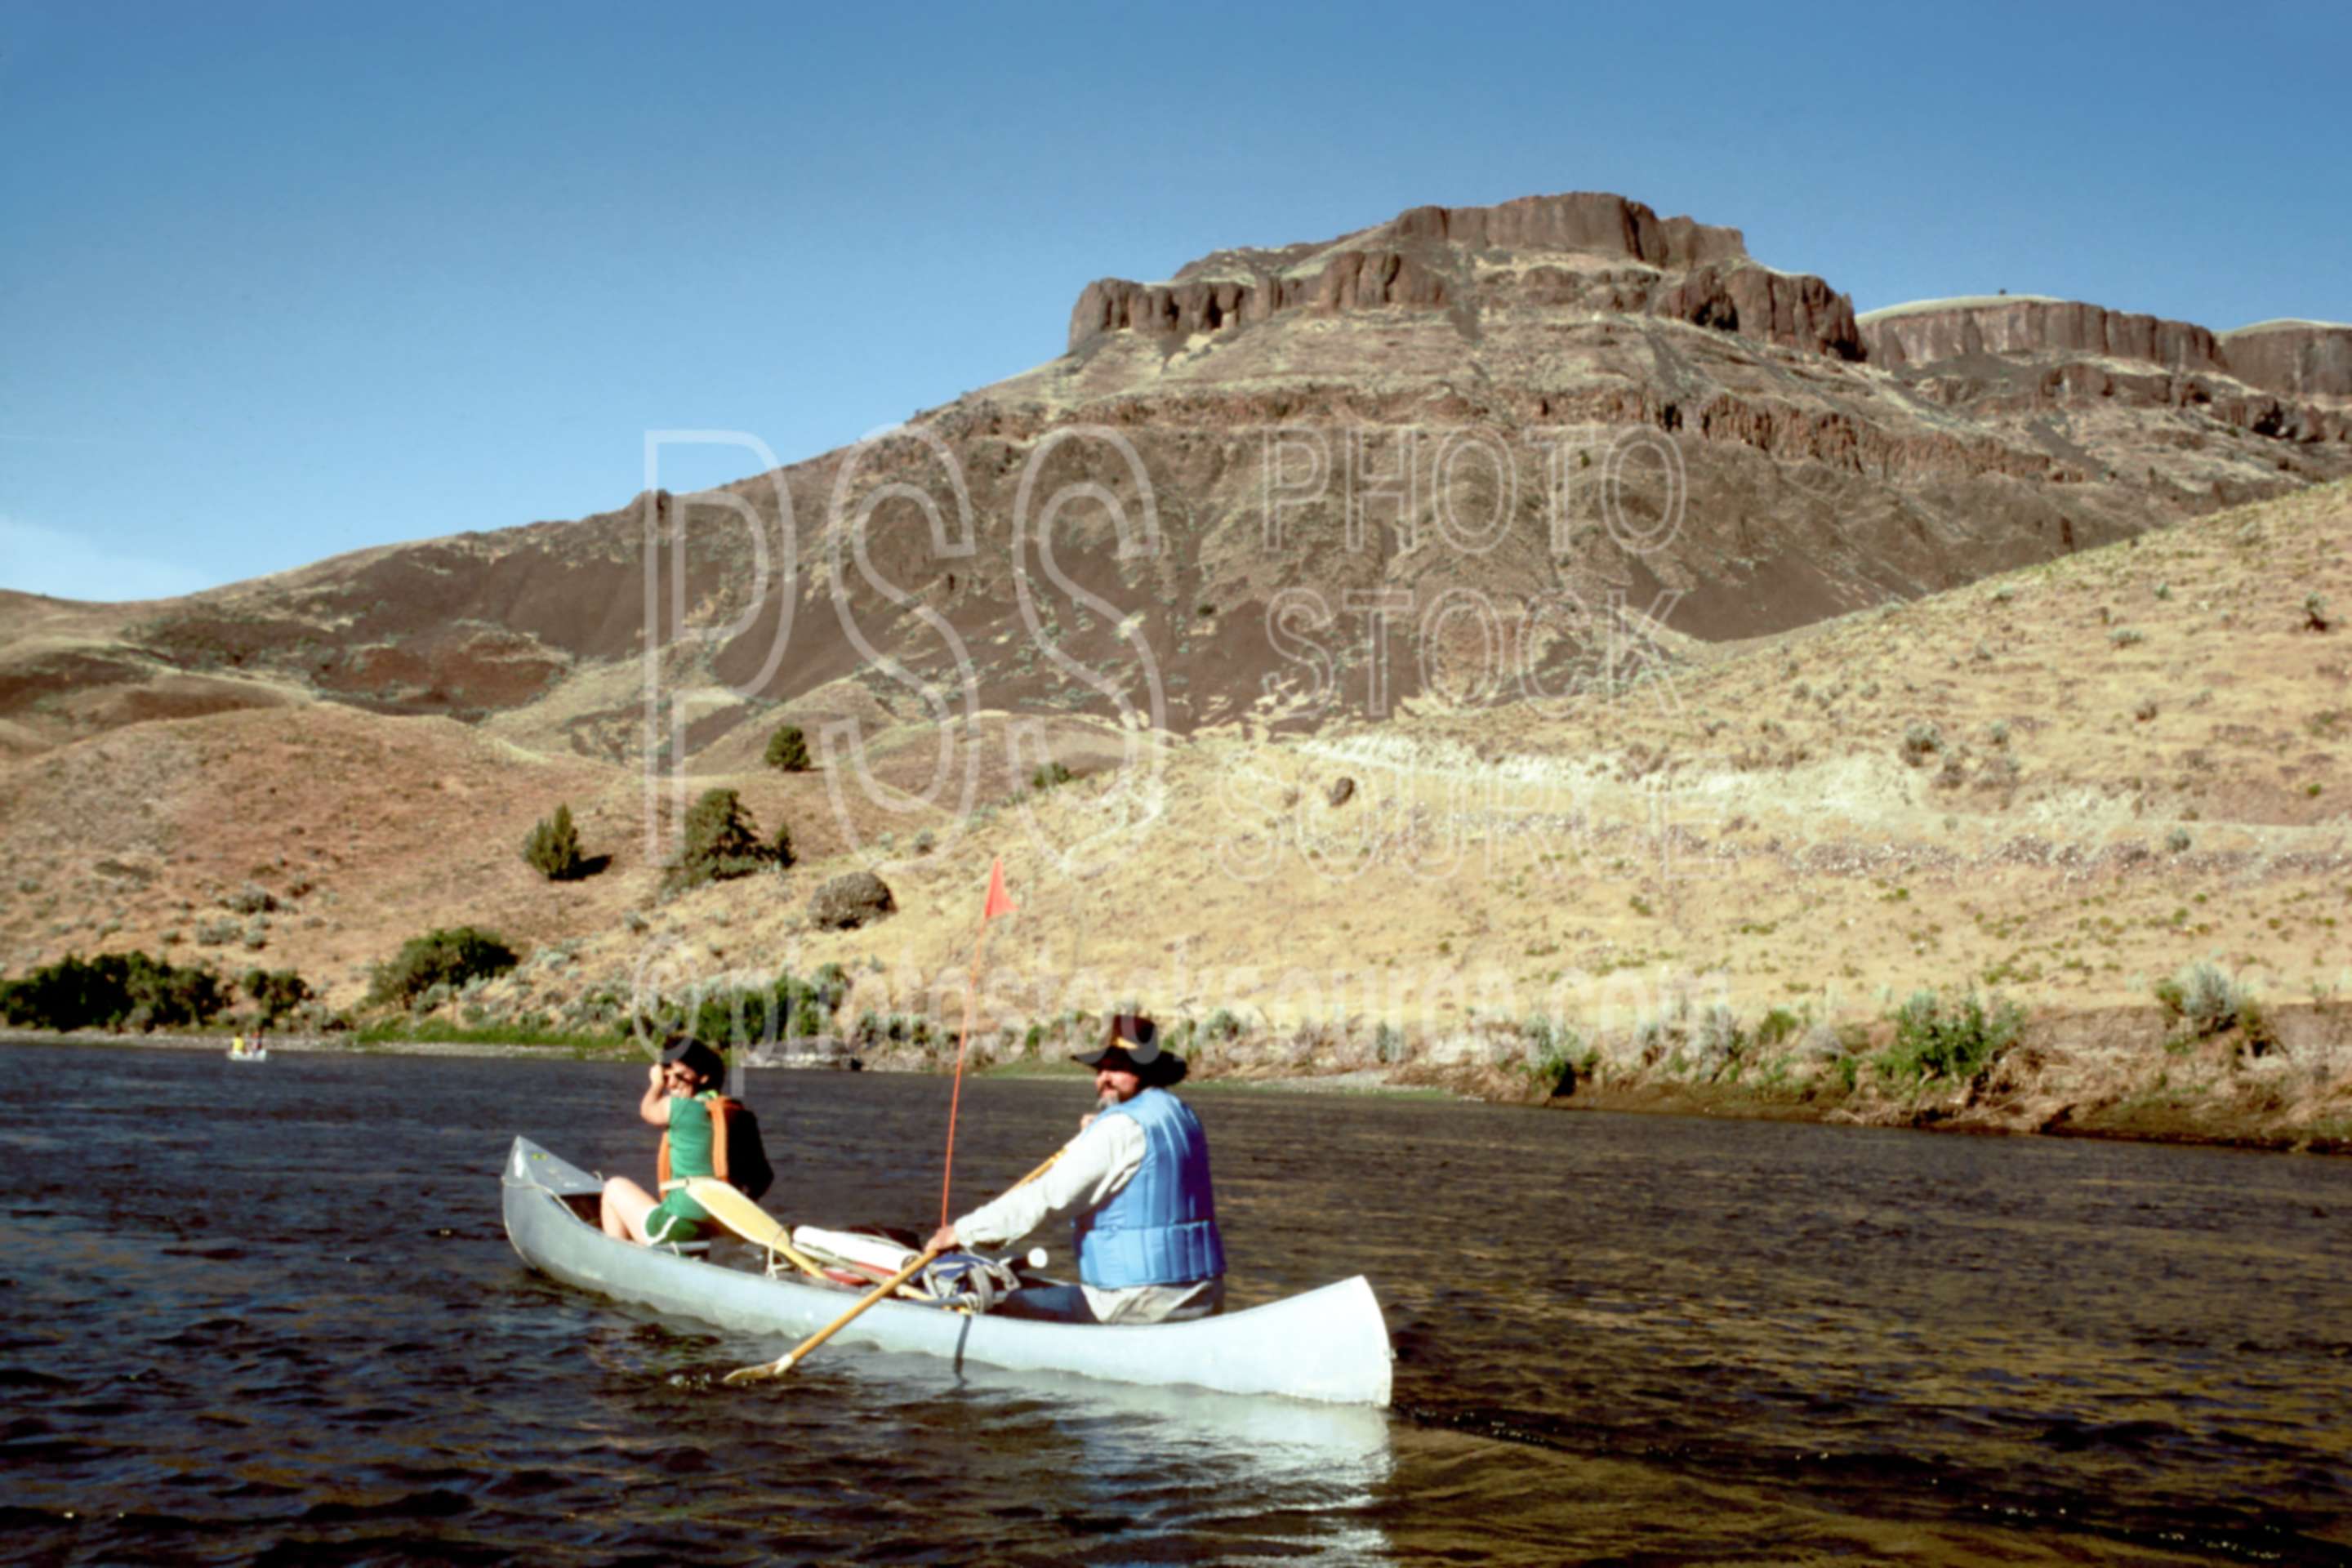 John Day River,canoe,people,river running,usas,lakes rivers